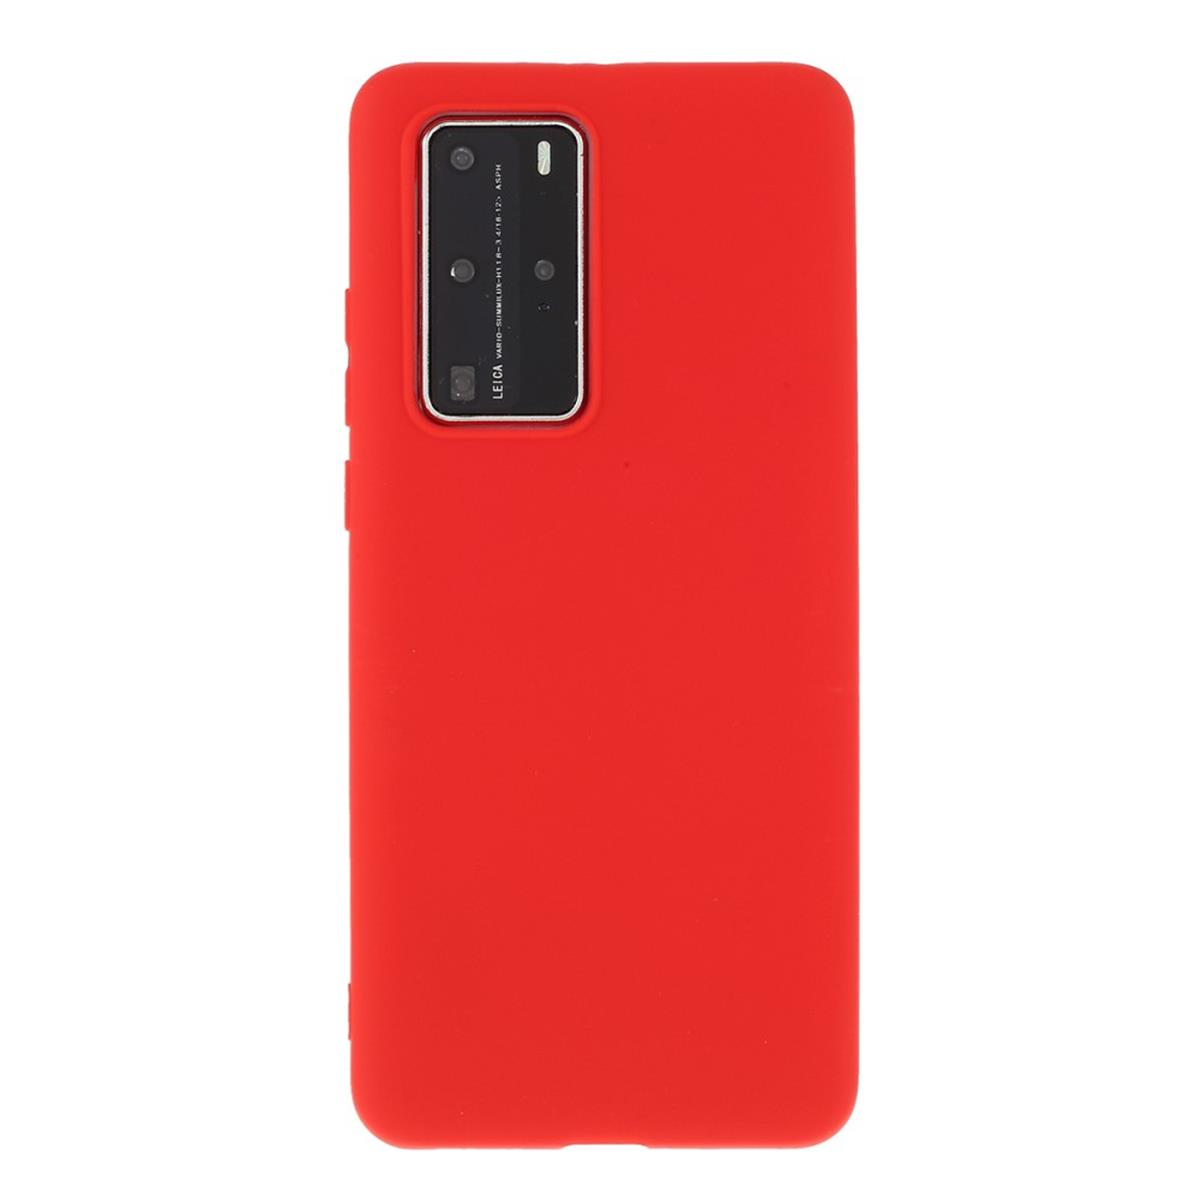 Handycase Backcover, COVERKINGZ Rot P40 Pro, Huawei, Silikon, aus